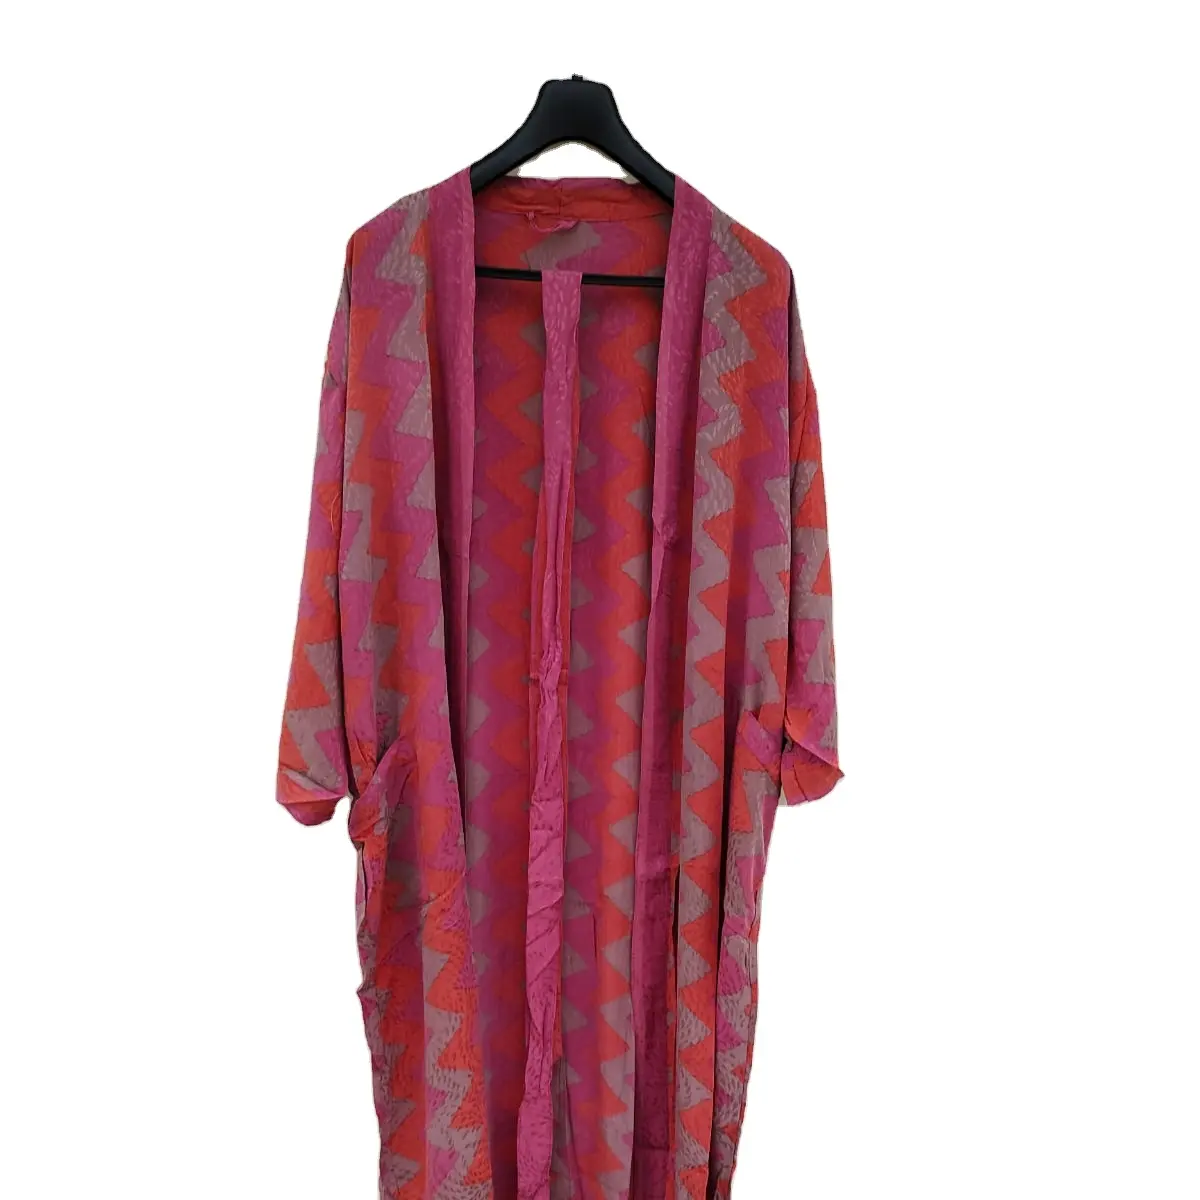 Crap Saree silk kimonos free size kimono night wear dress beach wear summer wear in wholesale price